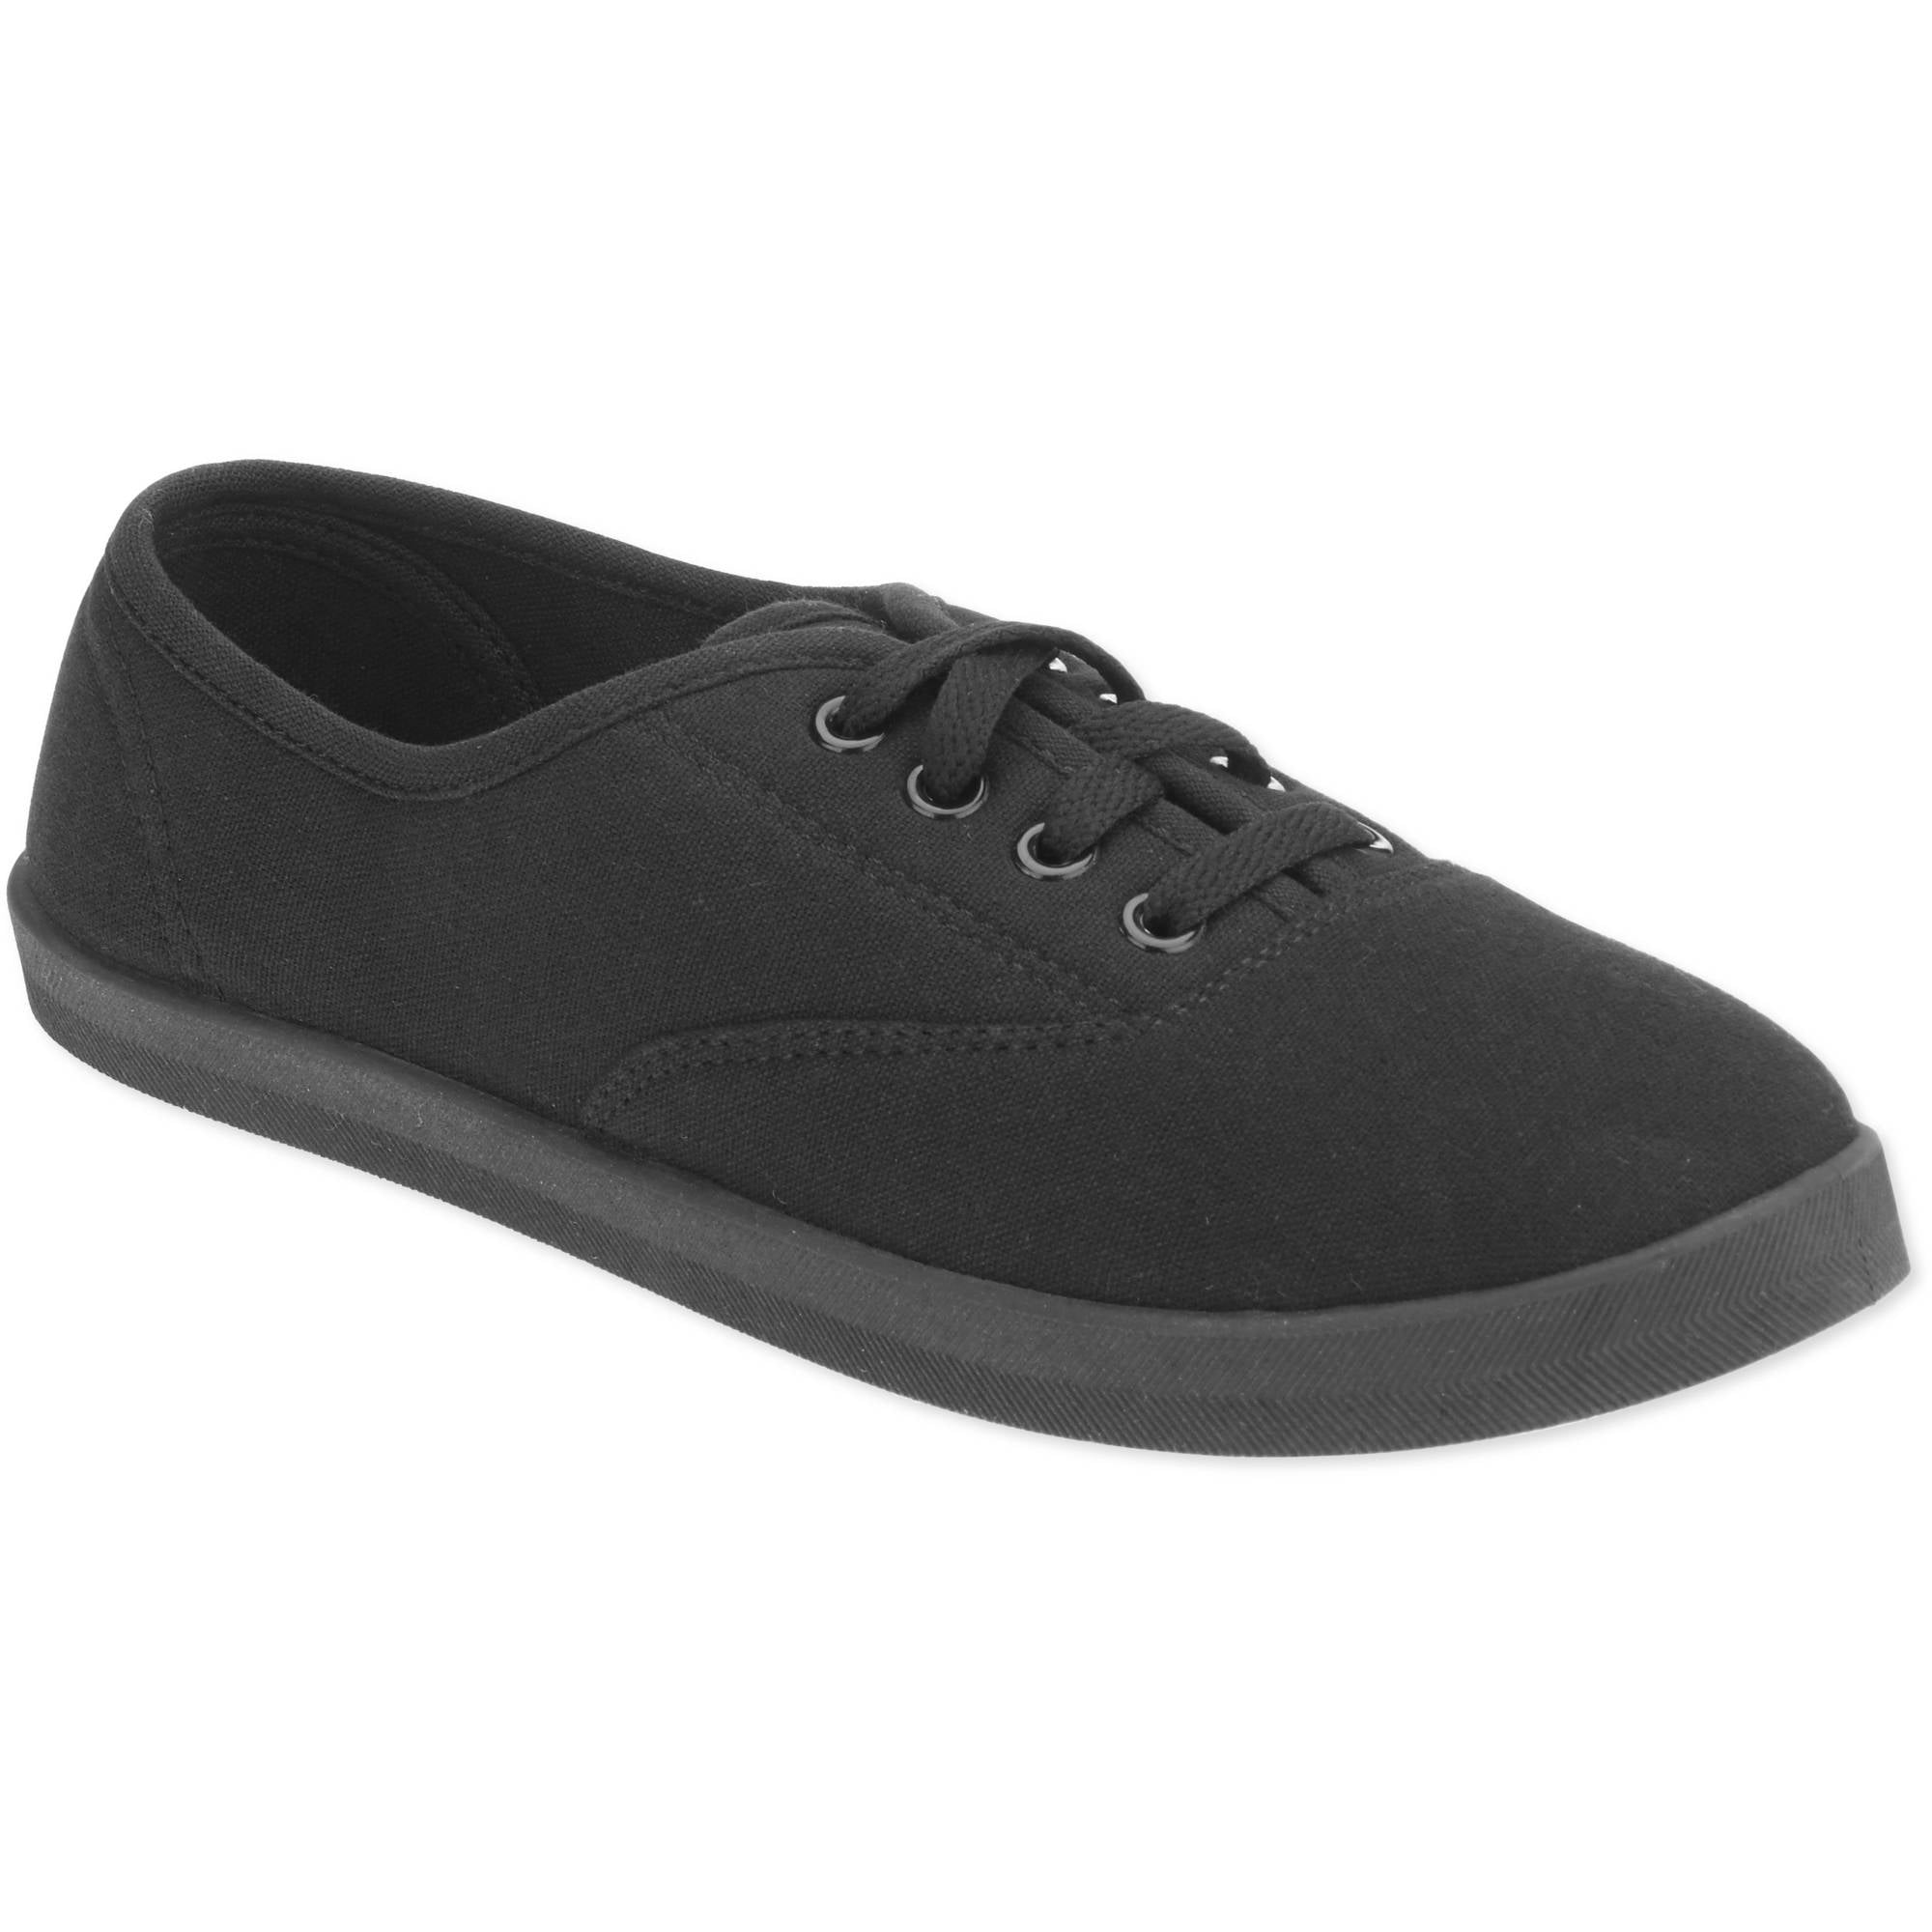 black slip on shoes walmart